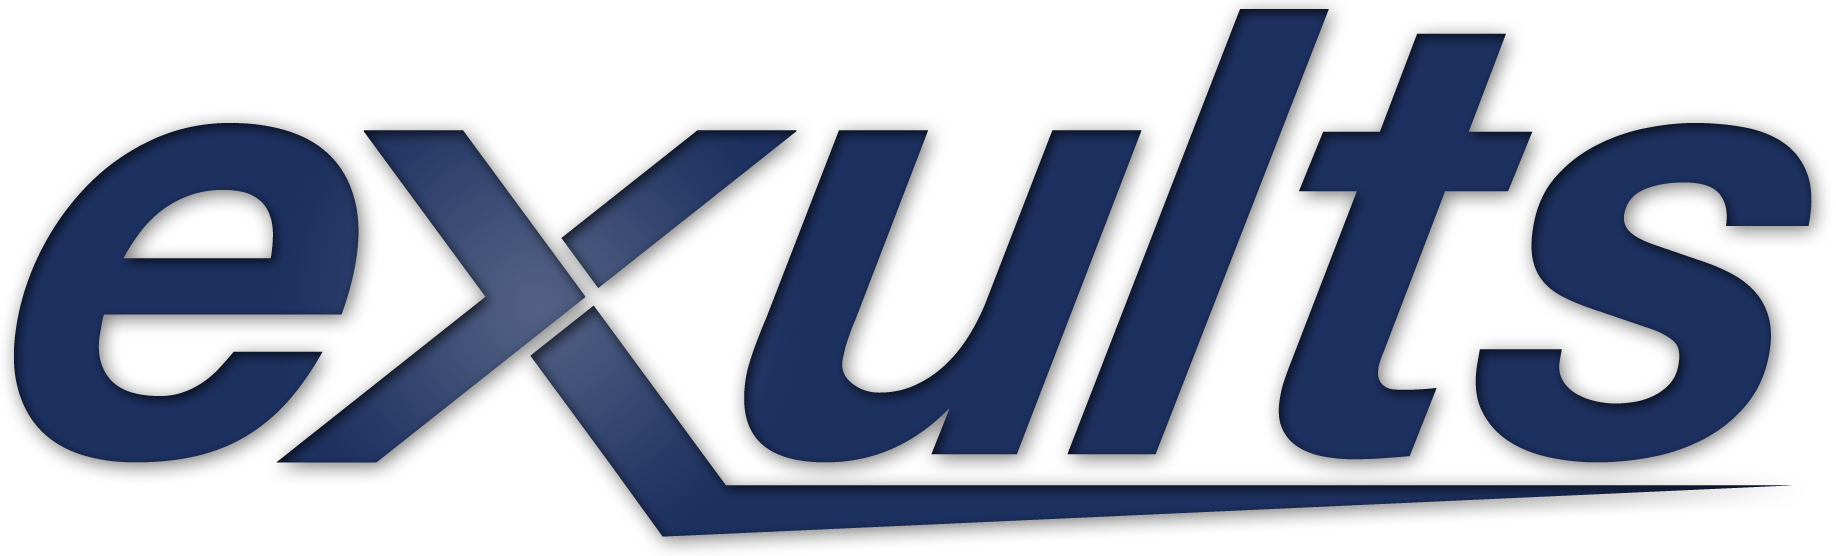 Exults Internet Marketing Agency logo